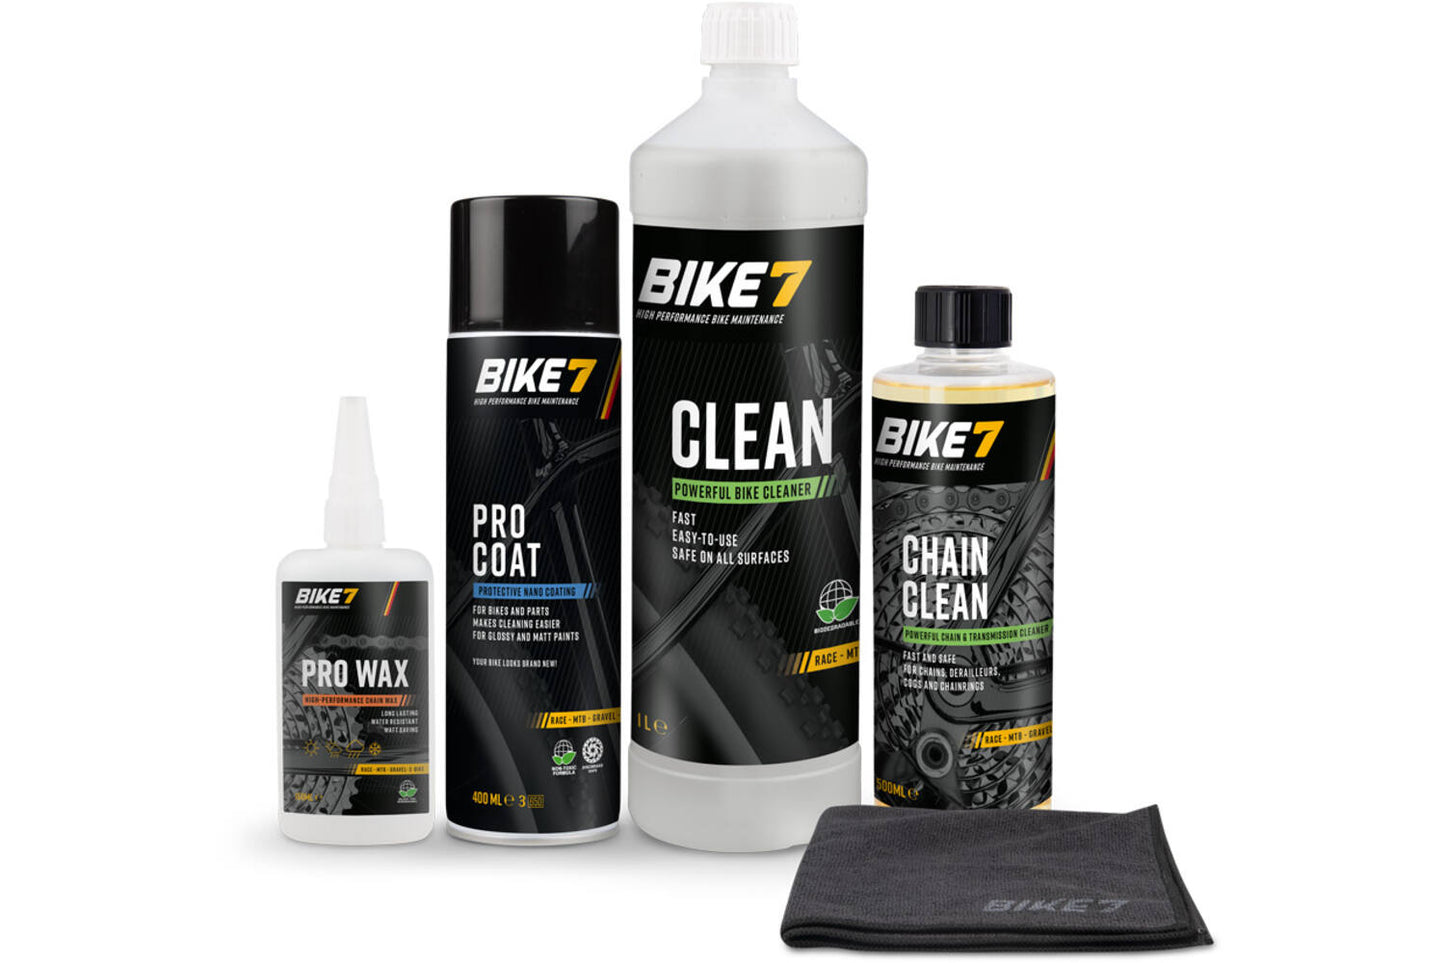 Bike7 Clean care box